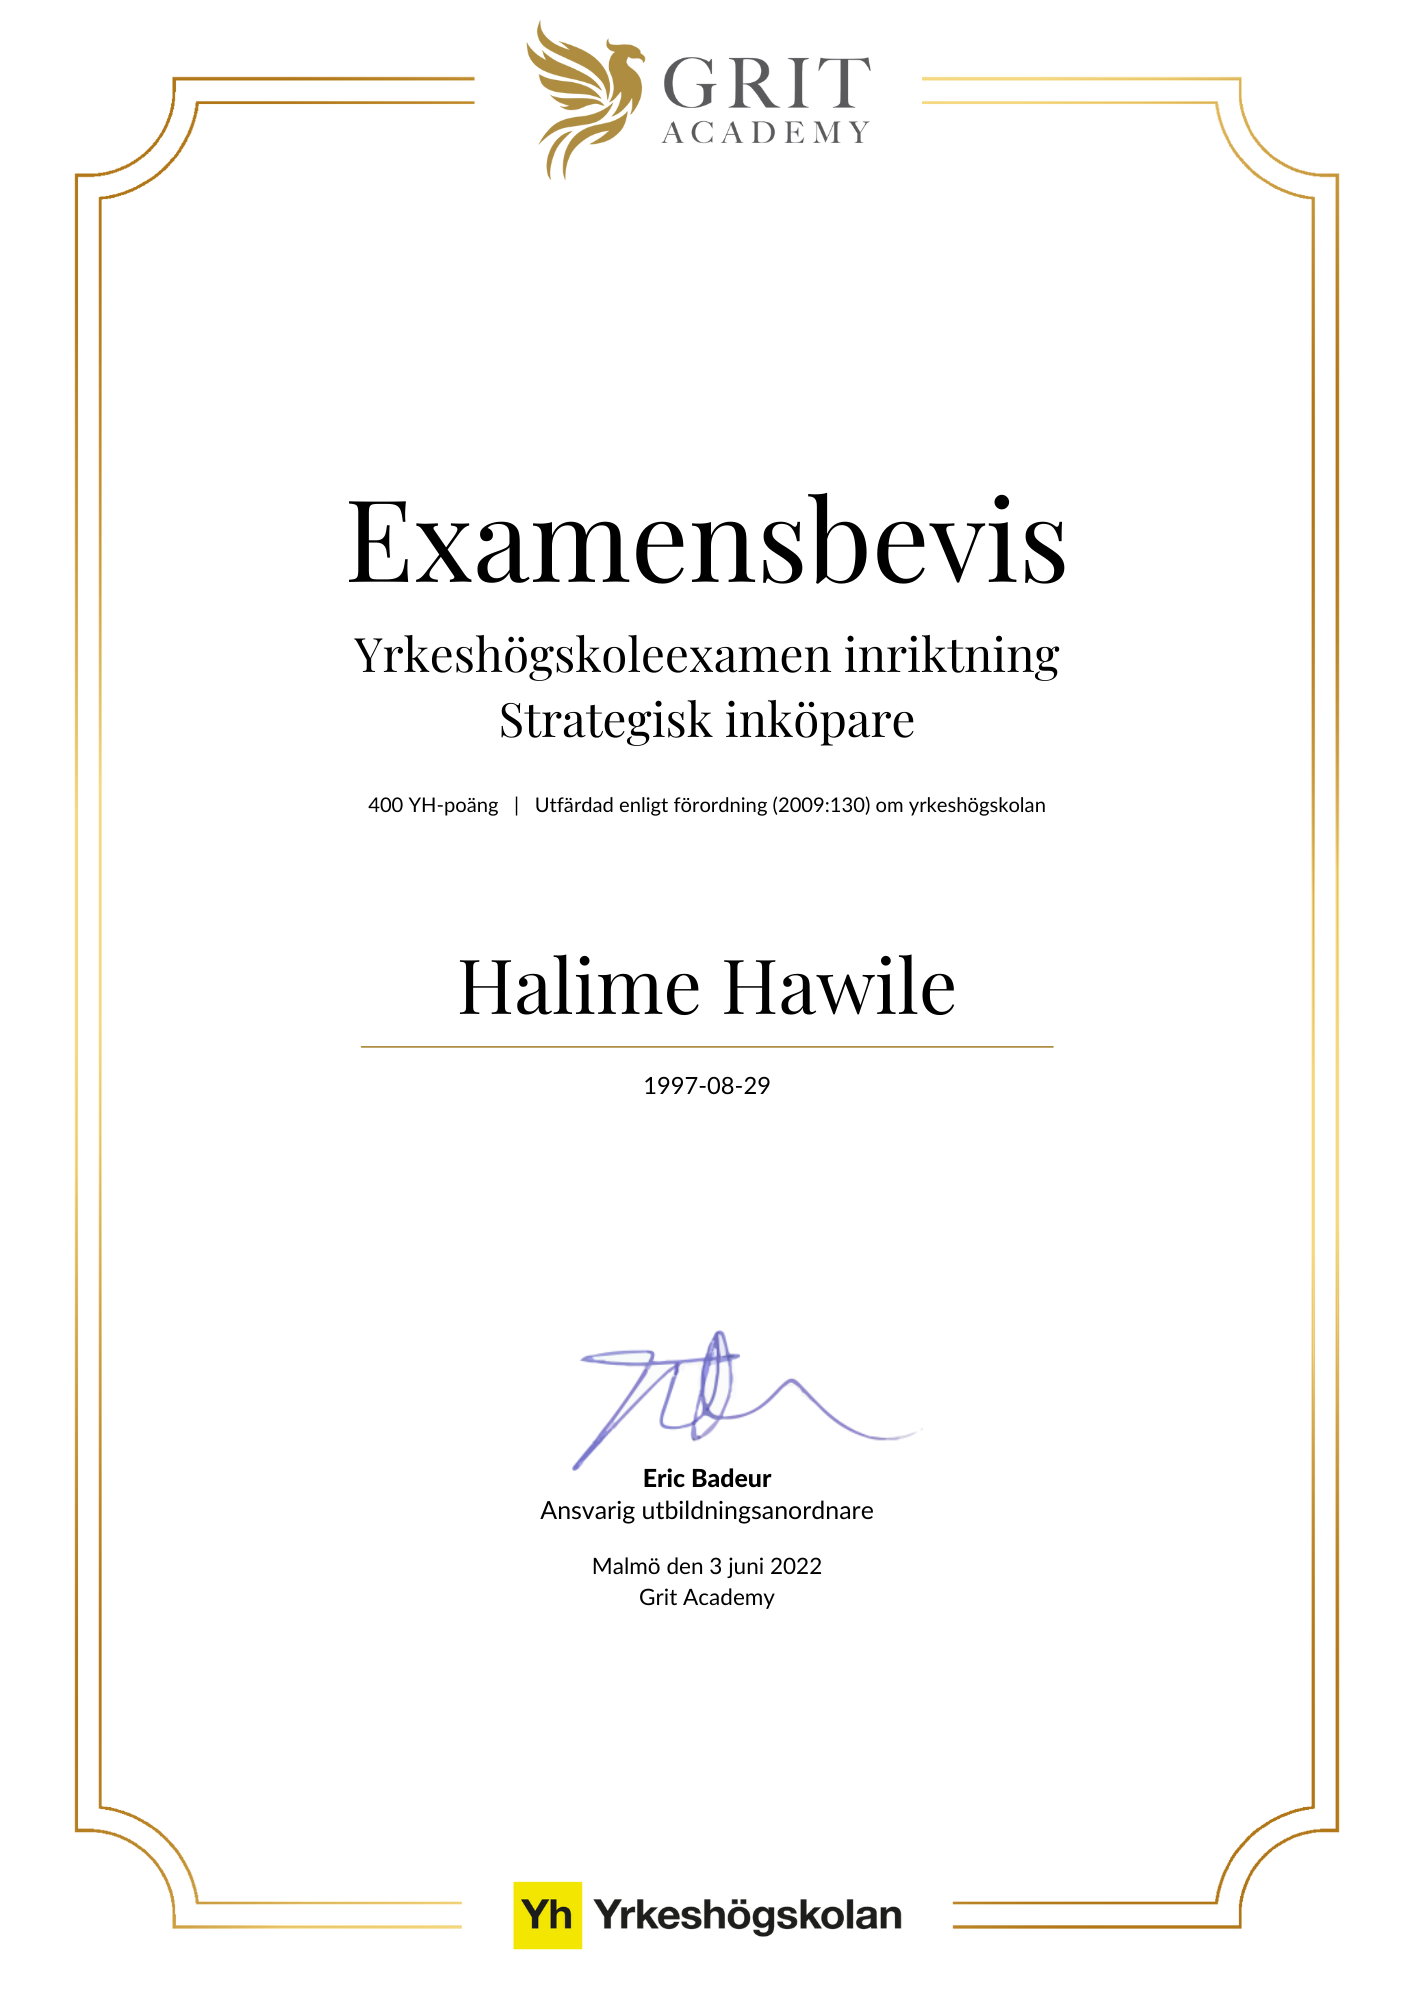 Examensbevis Halime Hawile - 1